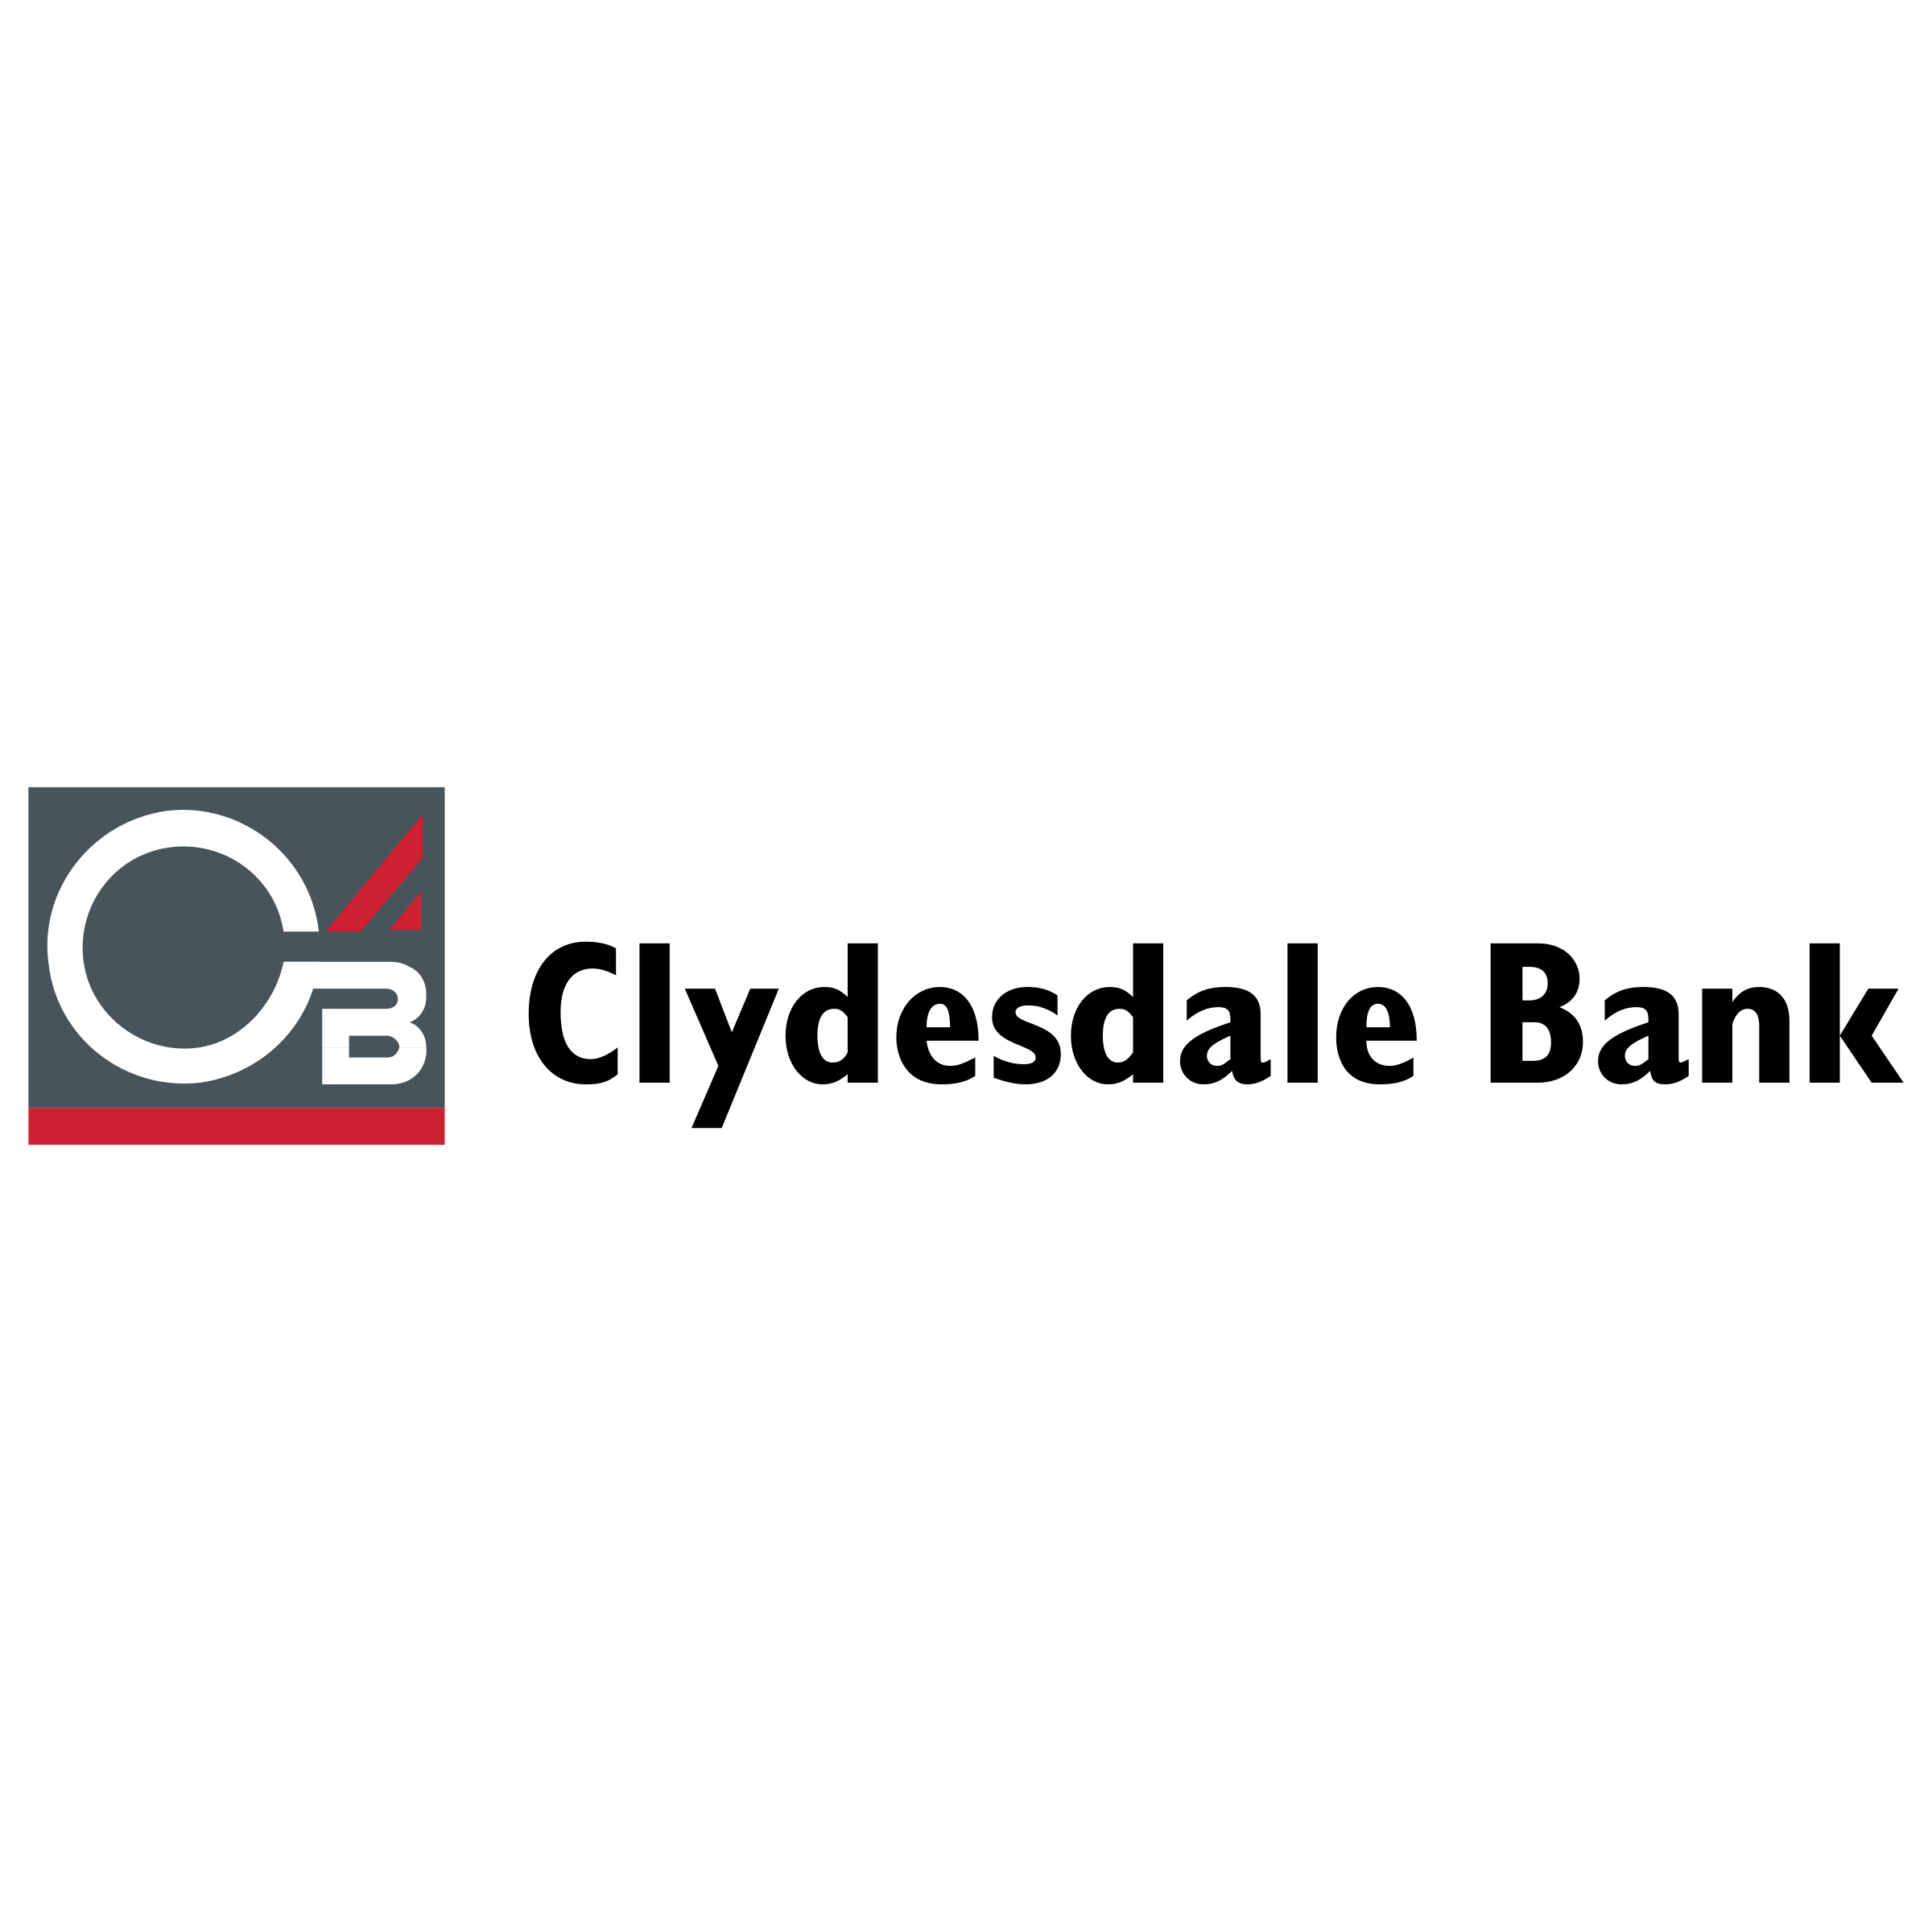 Clydesdale Logo - Clydesdale Bank Logo PNG Transparent & SVG Vector